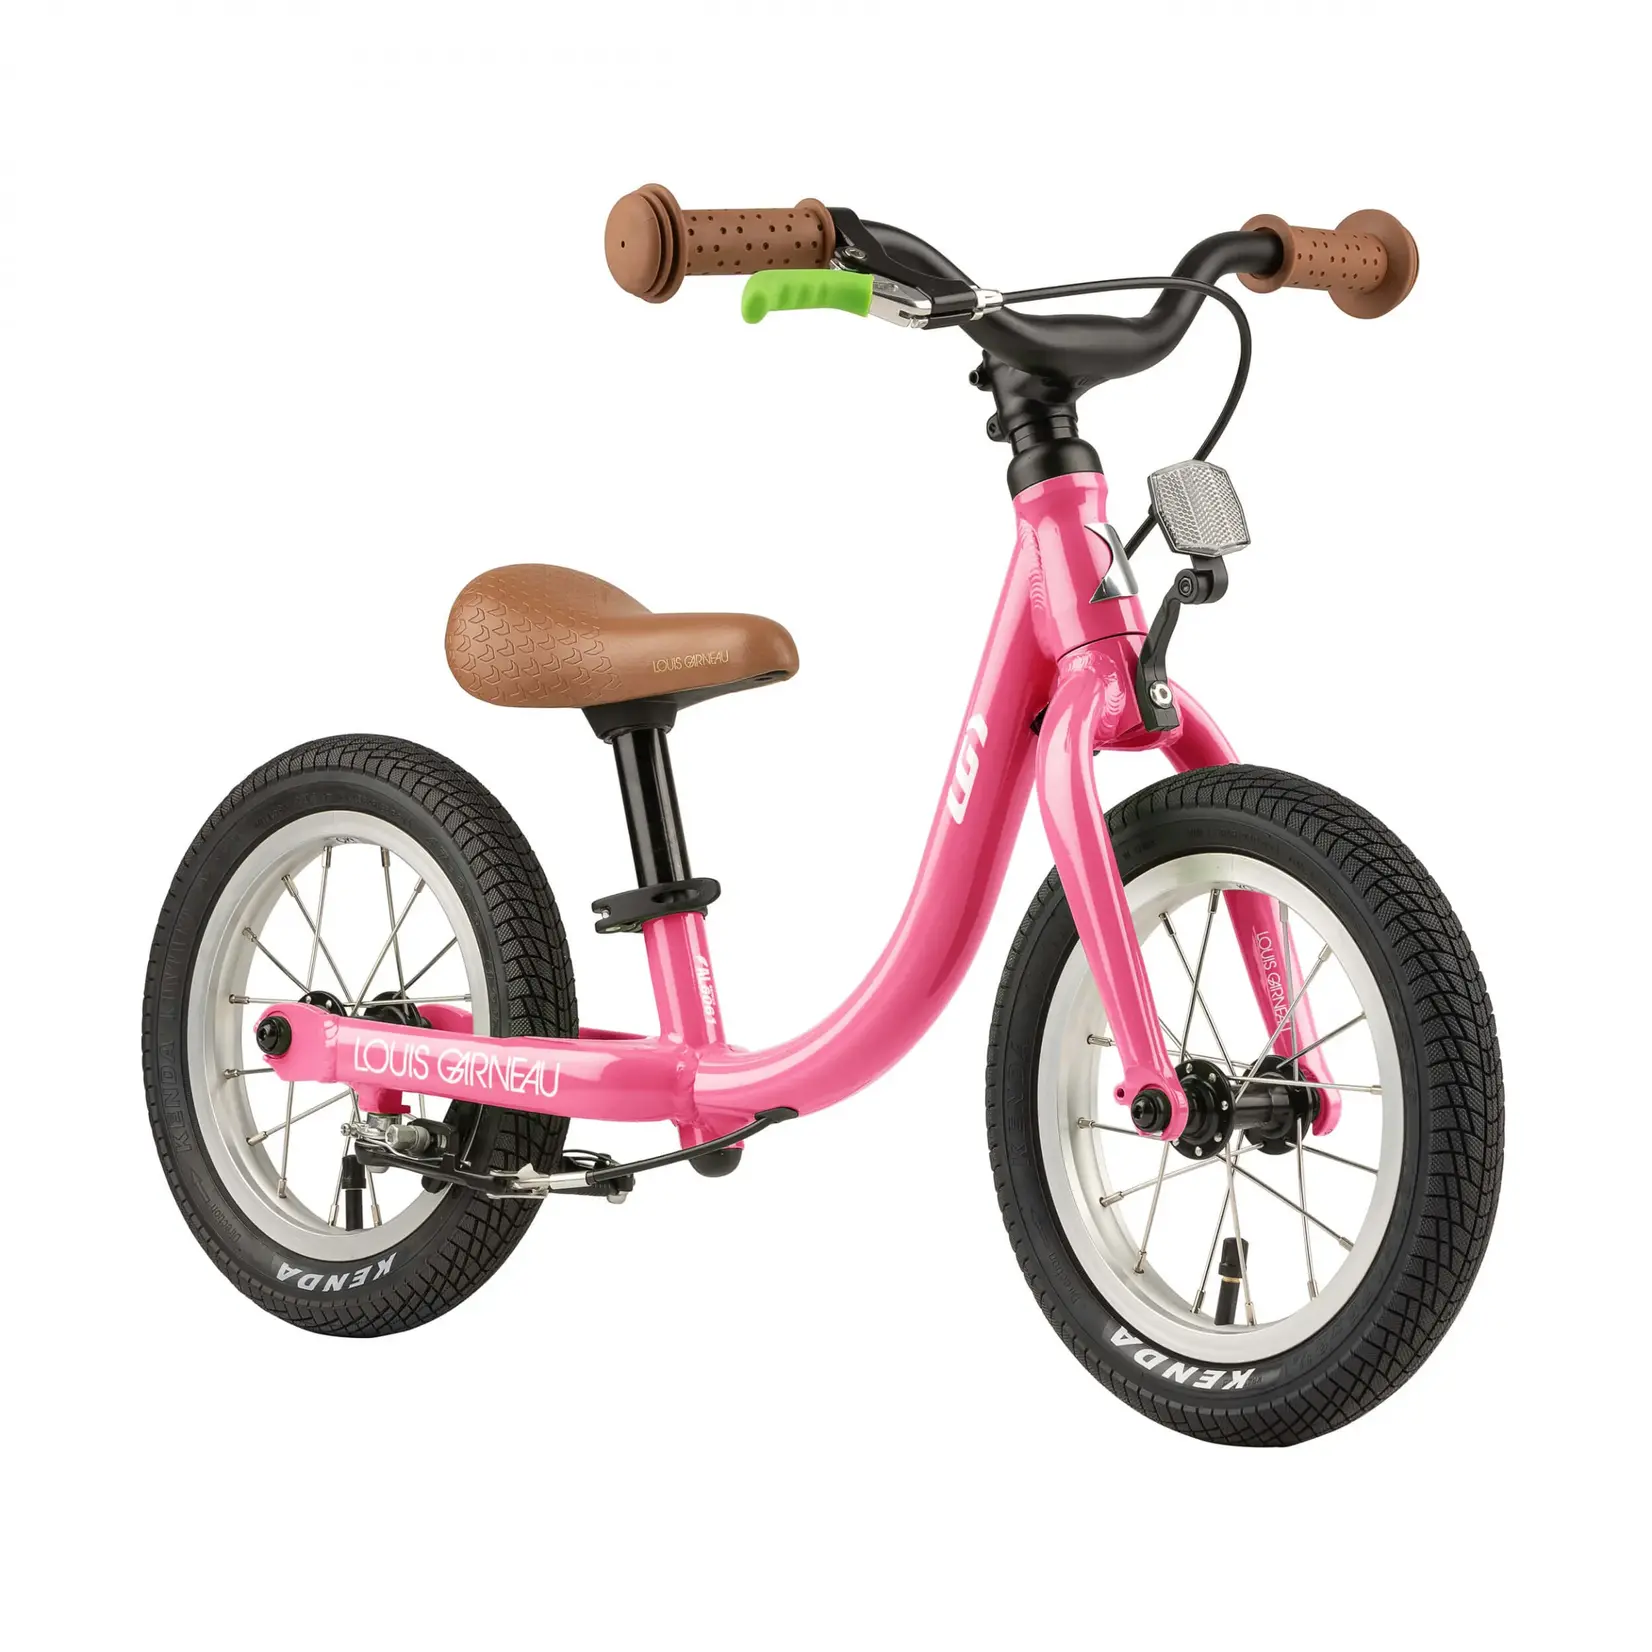 12" Balance bike for kids - Pink